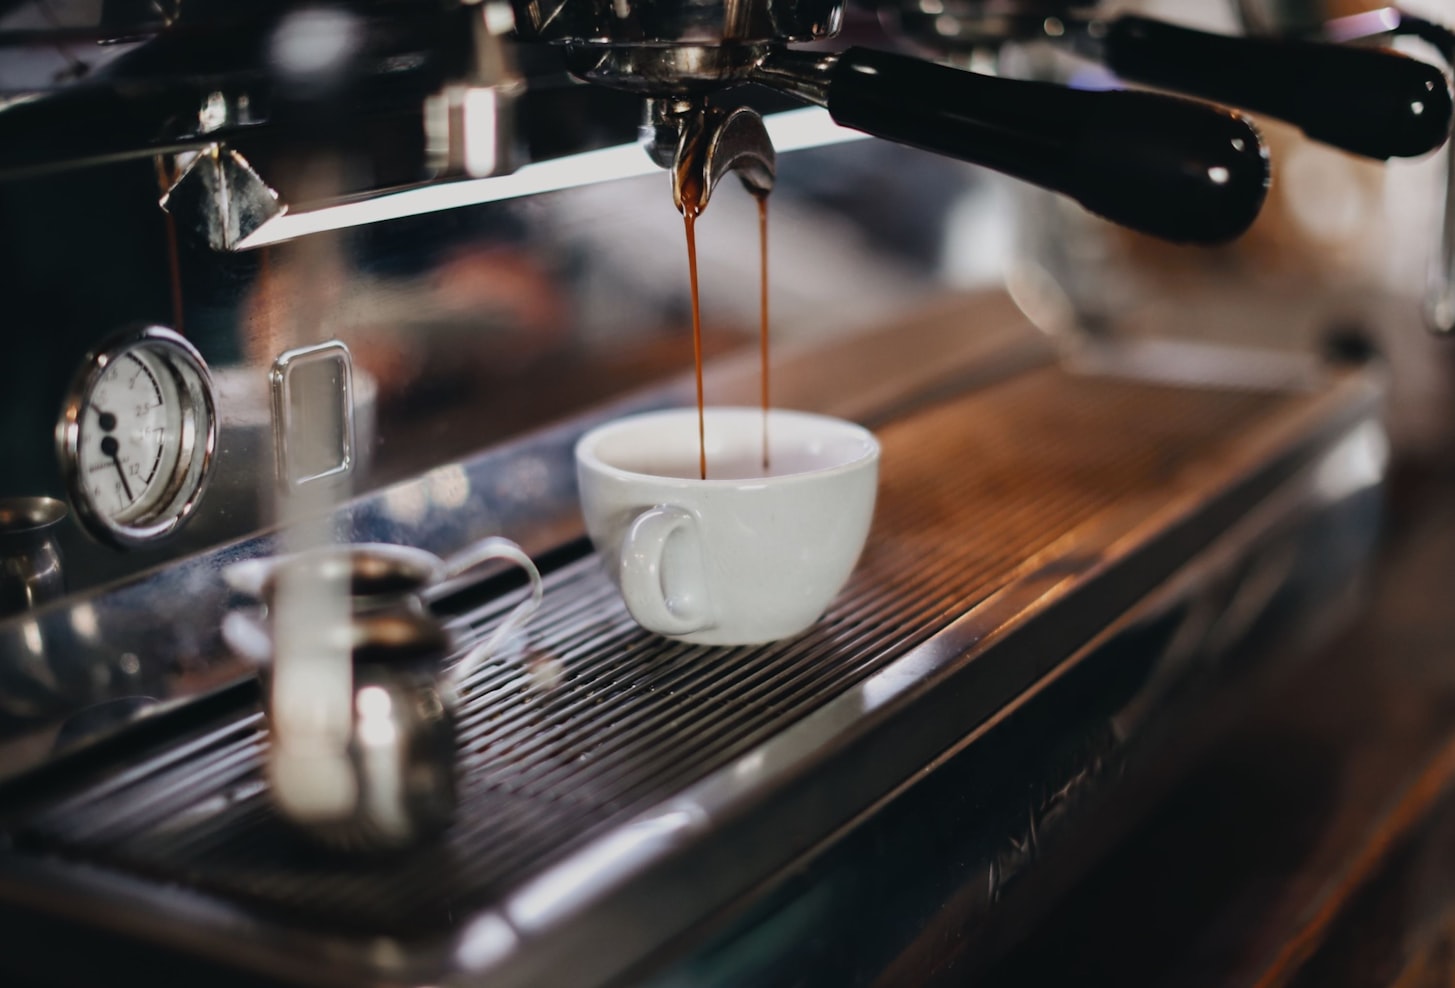 Best Espresso Machine Under 150 Based On Customer Ratings